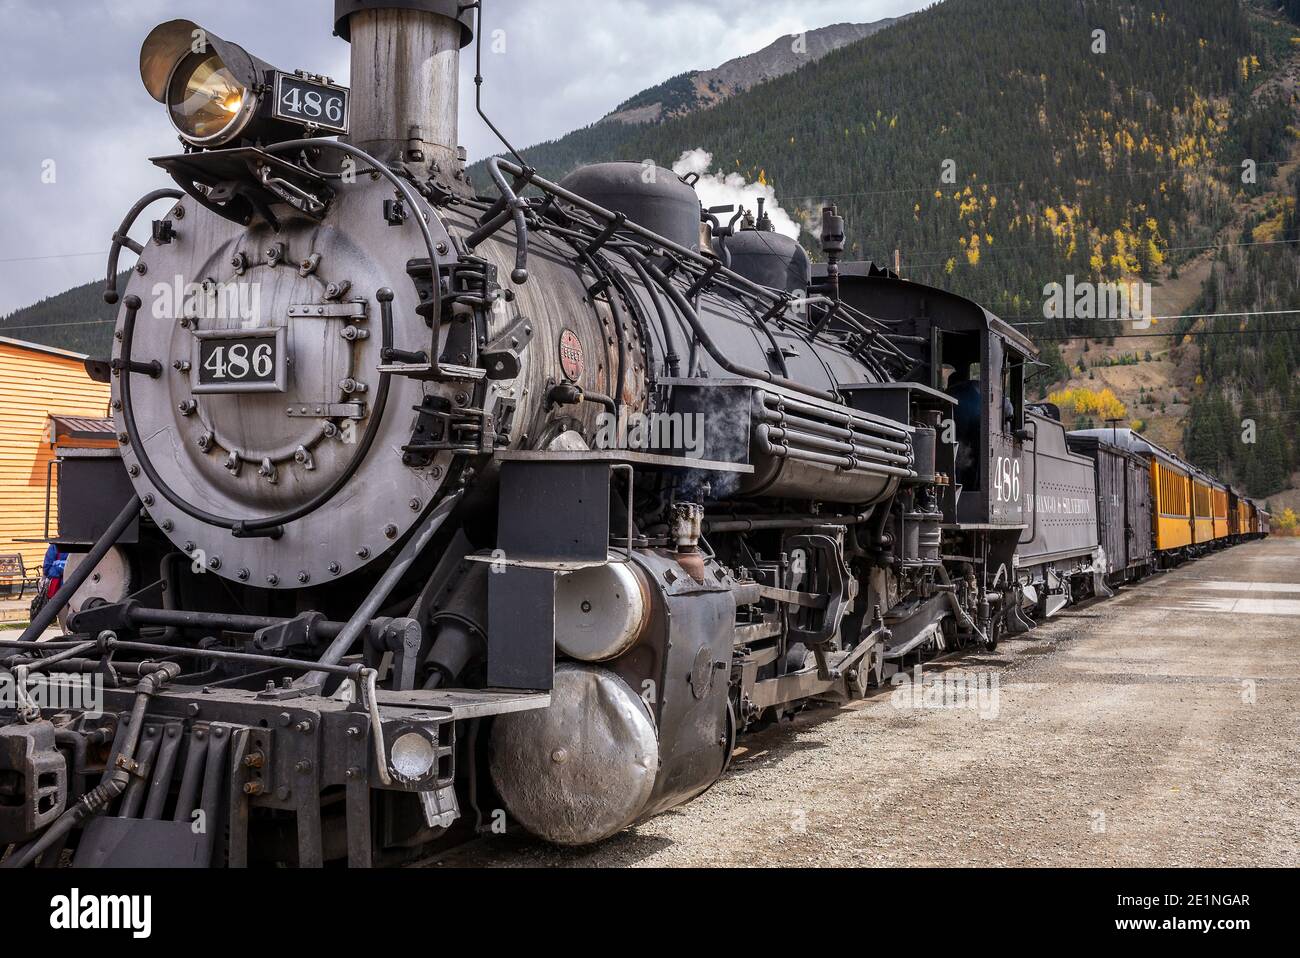 Rio Grande class steam locomotive 486 of the Durango and Silverton Narrow Gauge Railroad (D&SNG)  at Silverton station, Colorado, USA Stock Photo